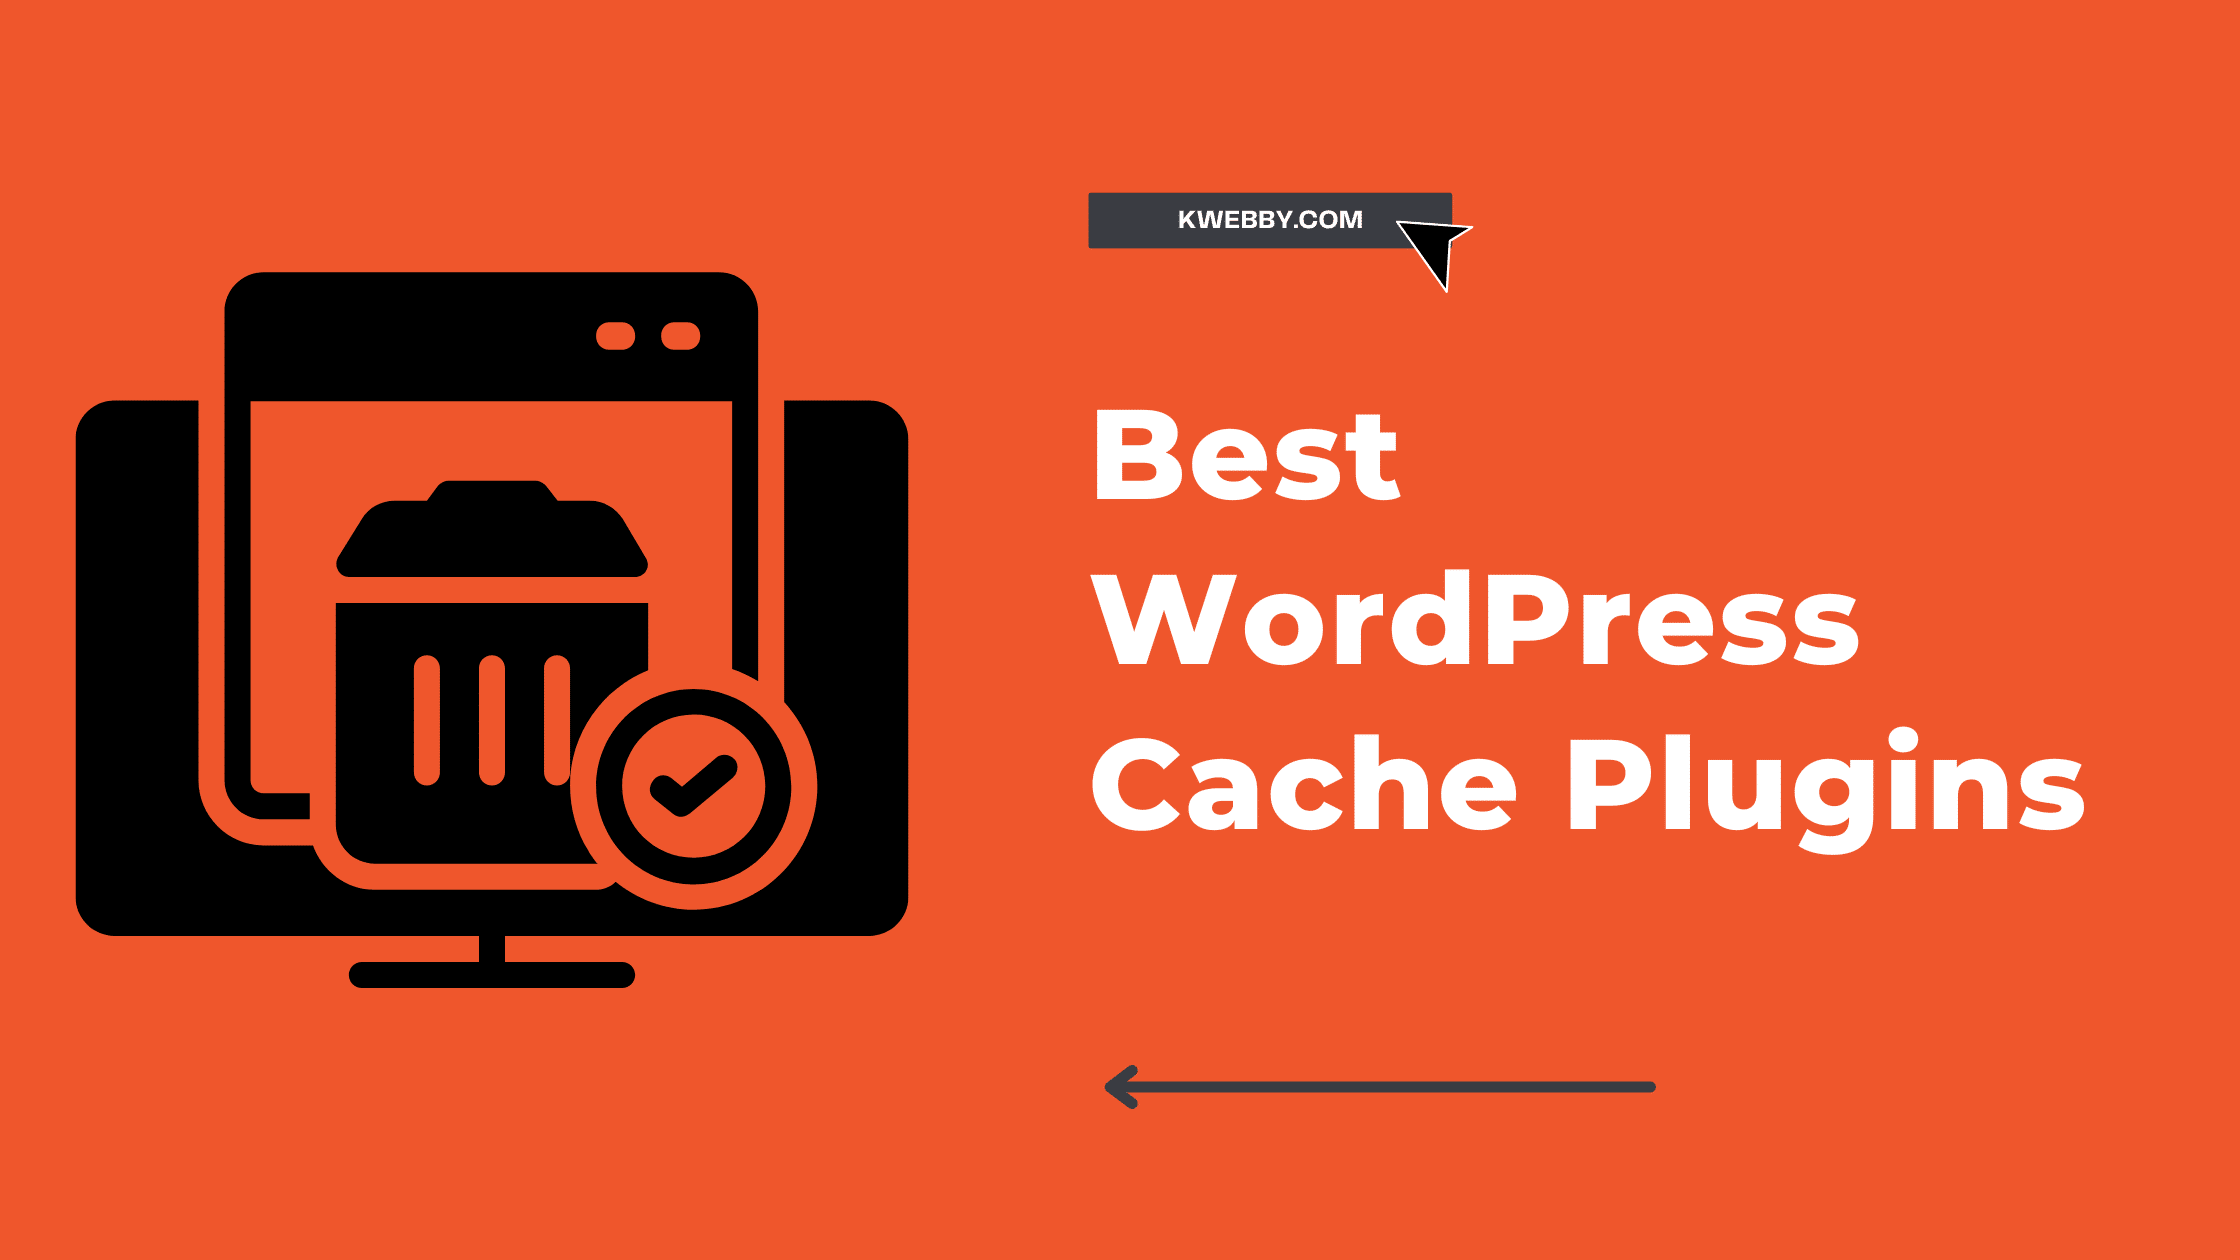 8 Best WordPress Cache Plugins to skyrocket your website’s speed